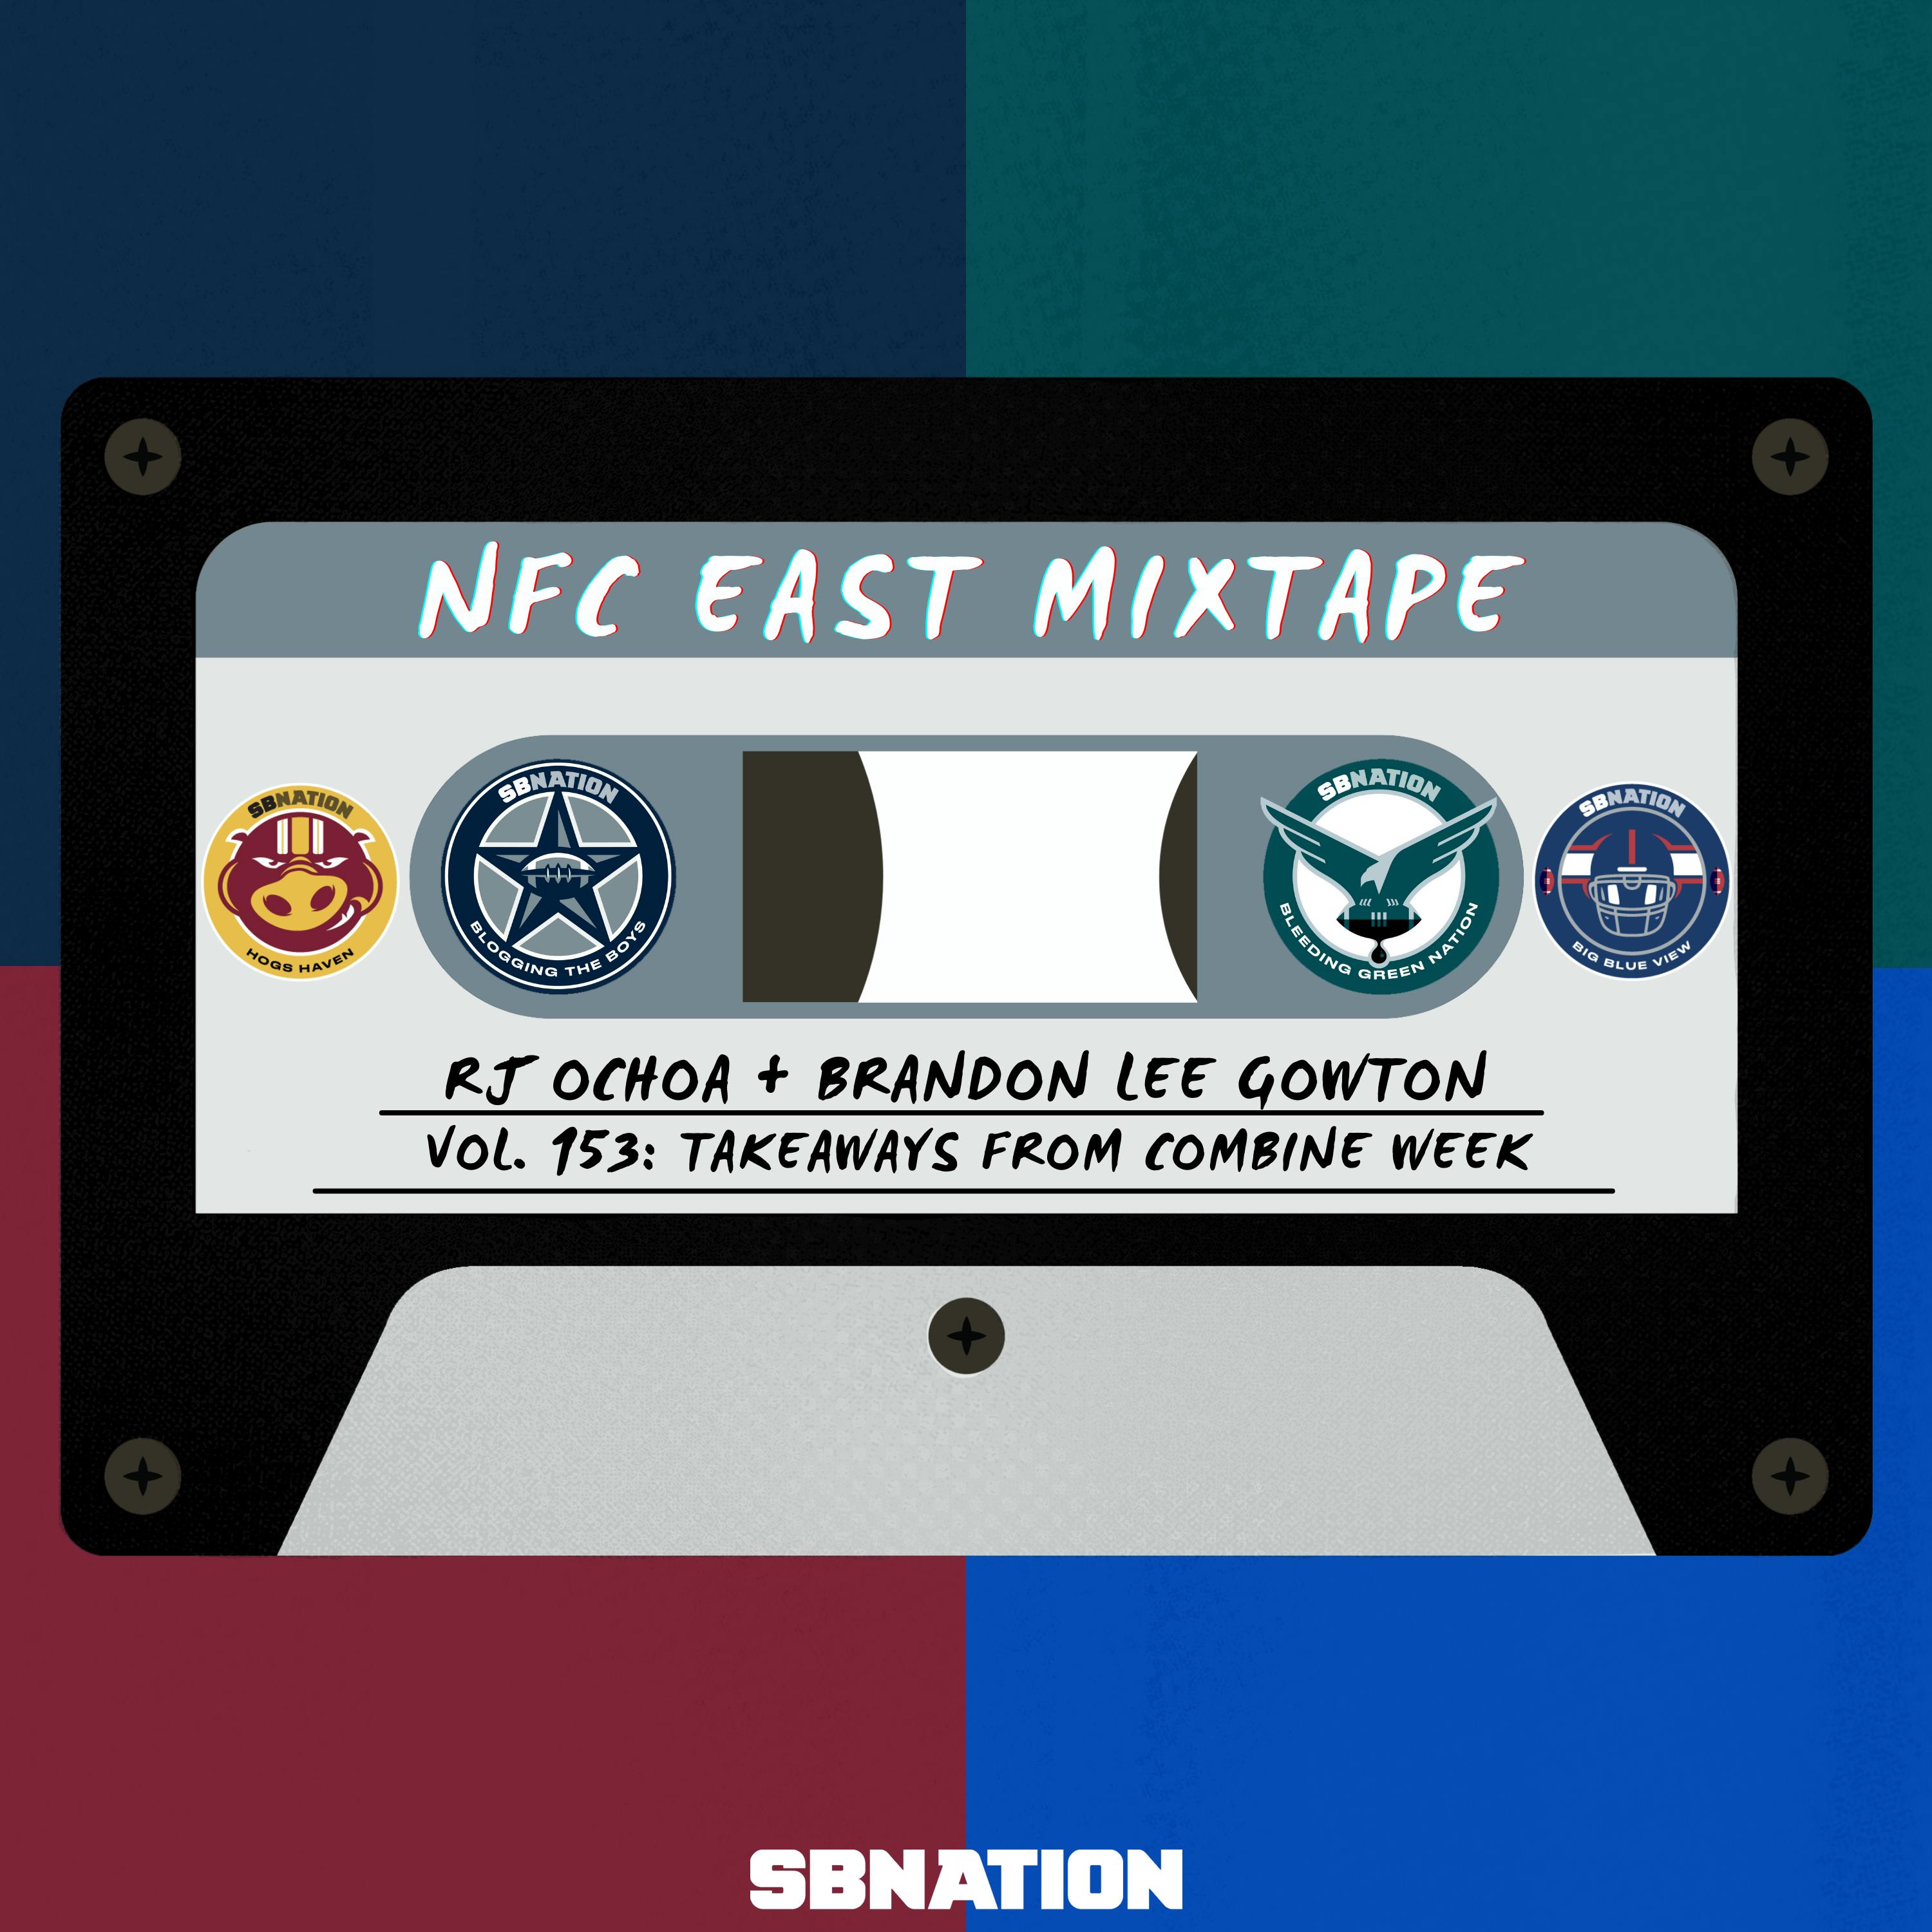 NFC East Mixtape Vol. 153: Takeaways from Combine Week